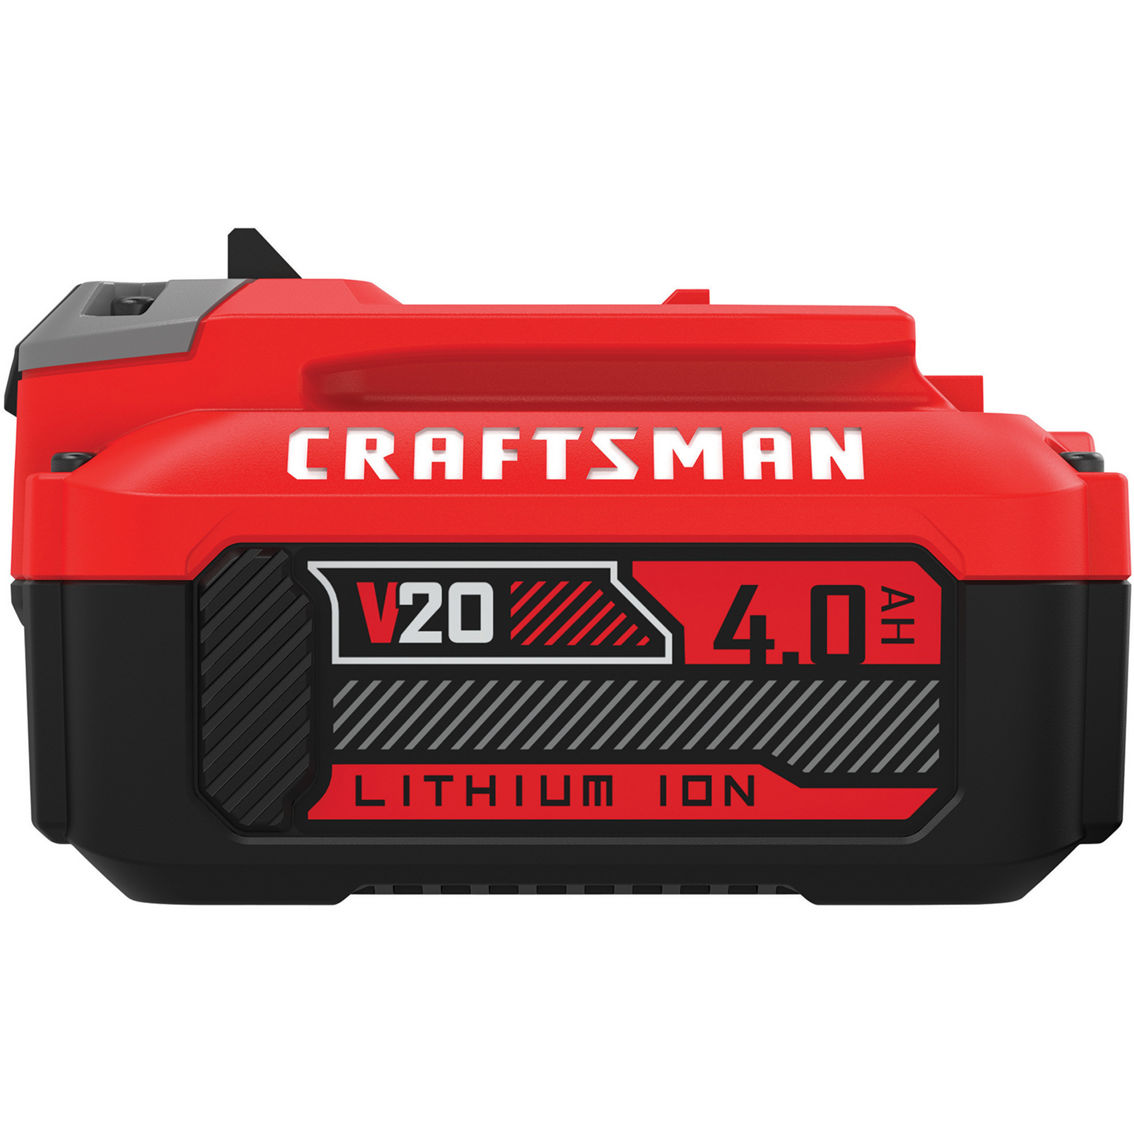 Craftsman V20 4Ah High Capacity Lithium Battery - Image 2 of 5